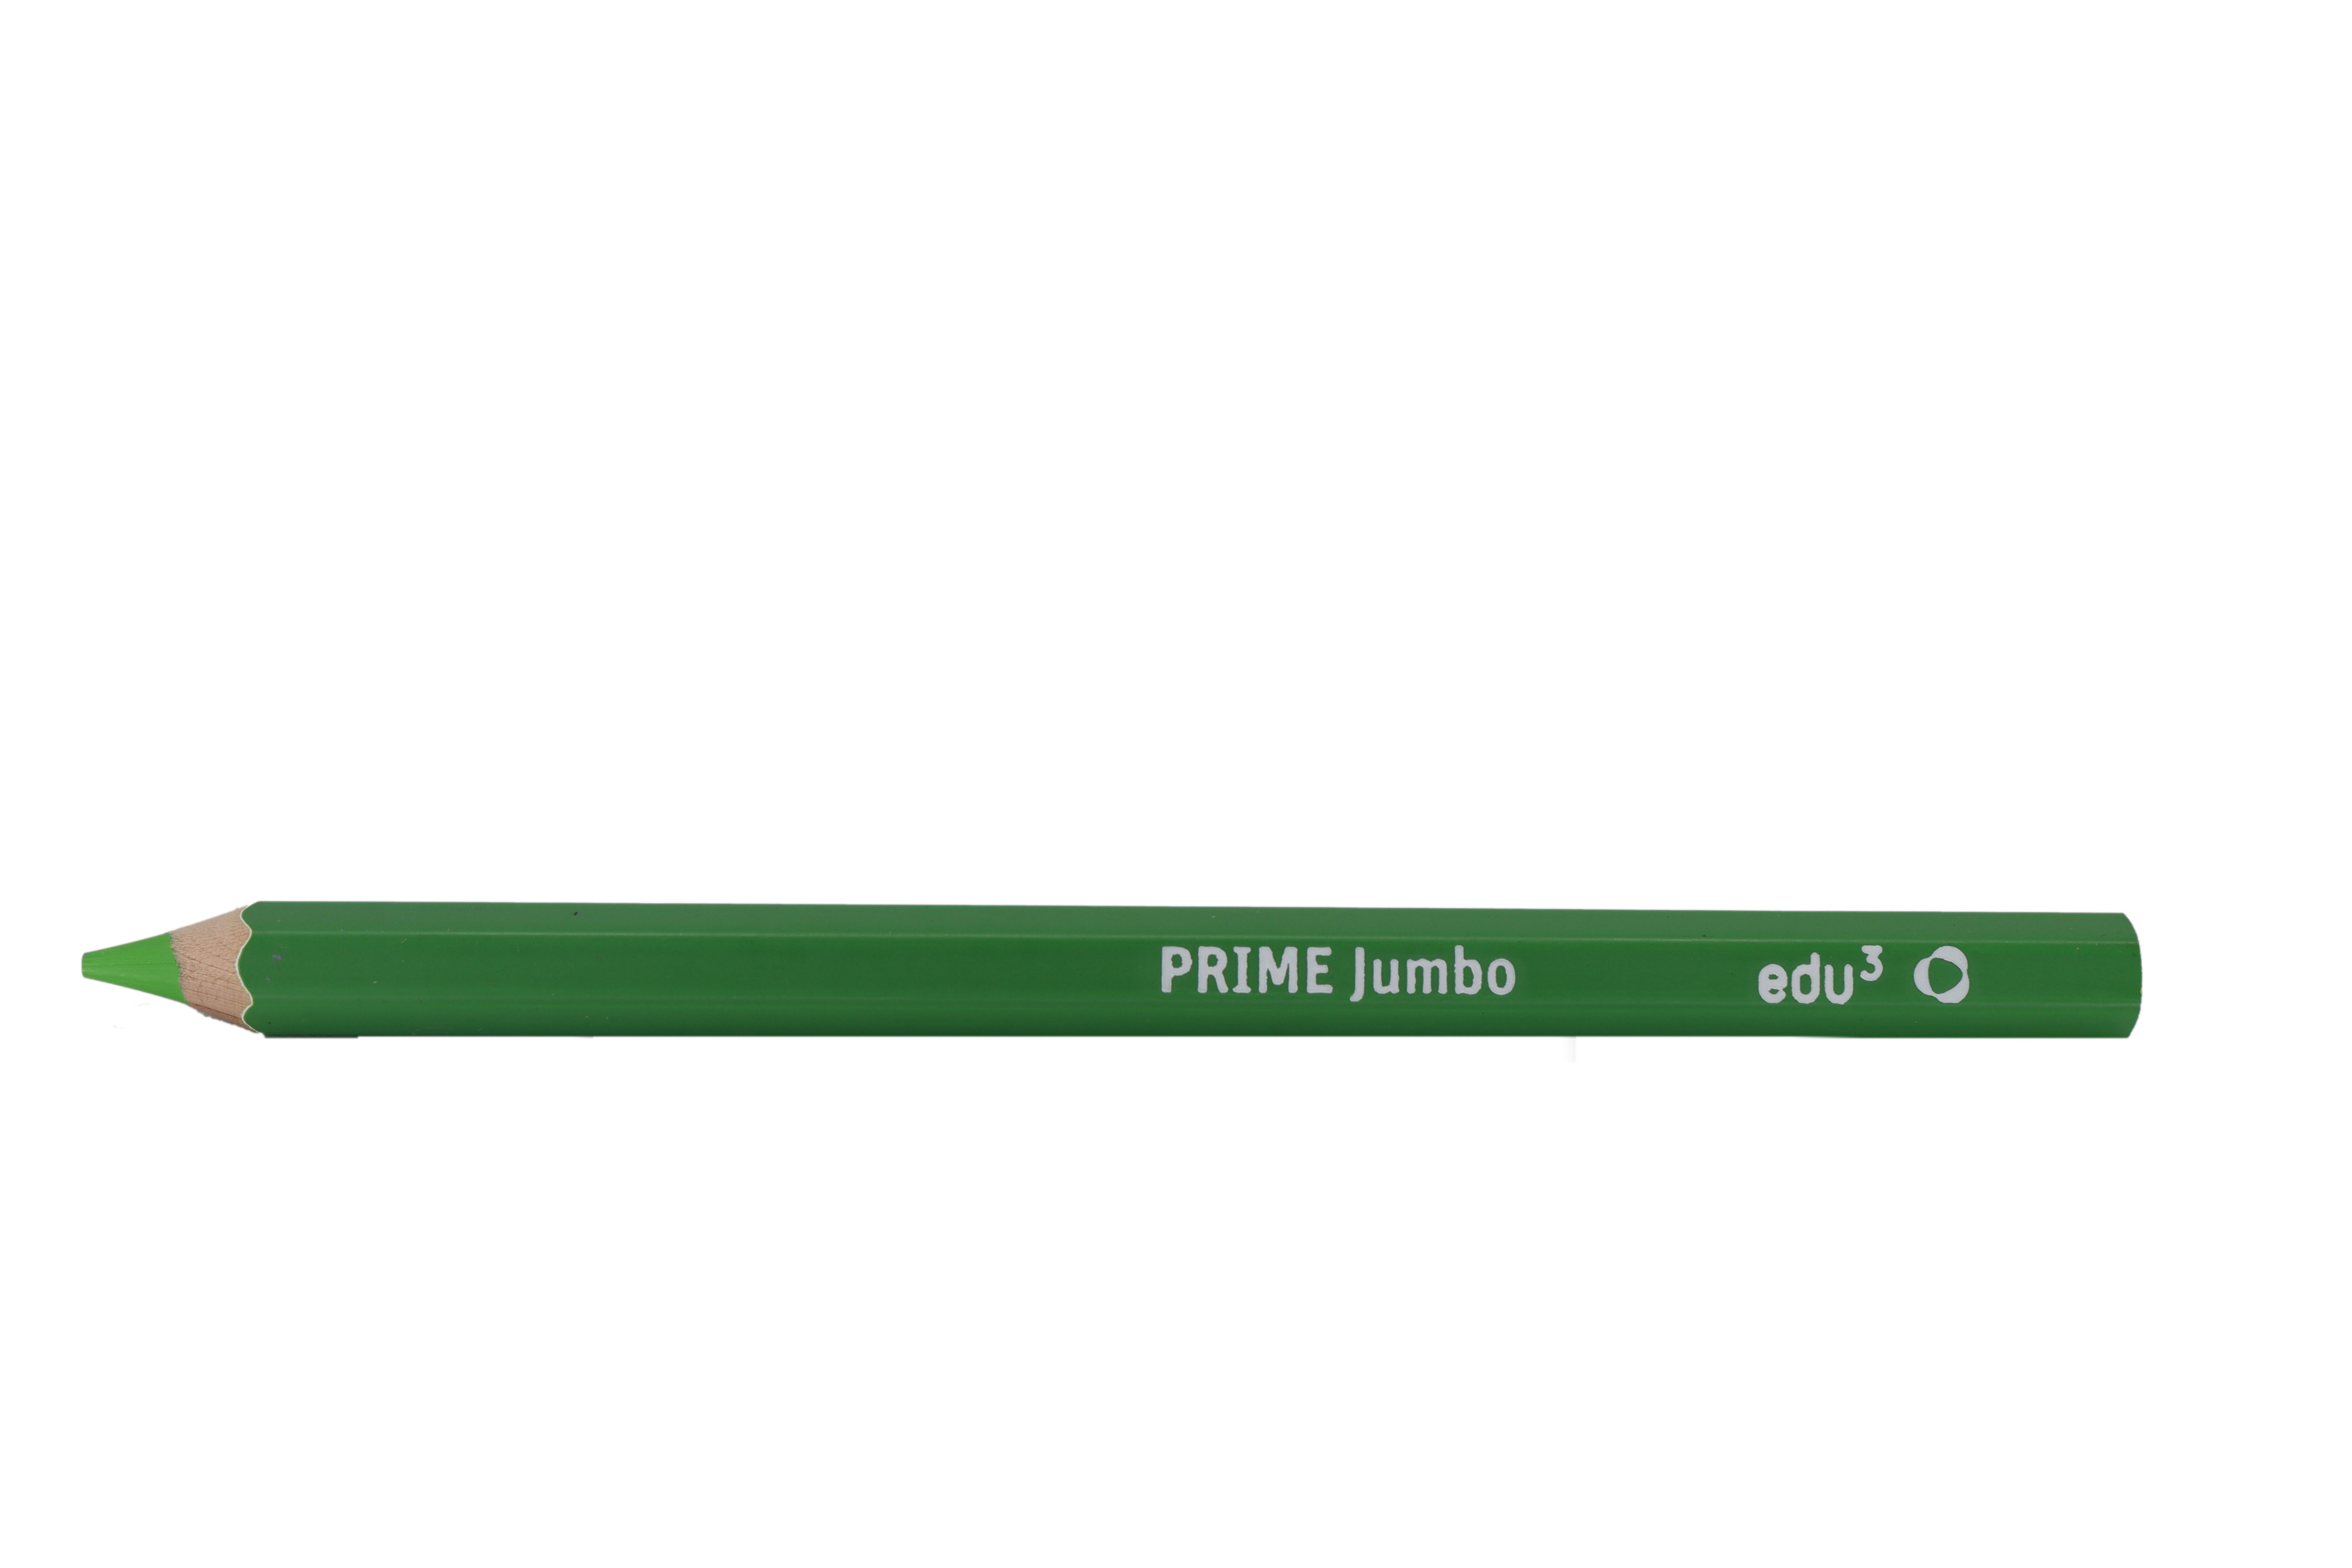 edu³ PRIME Jumbo Buntstifte sechskant hellgrün